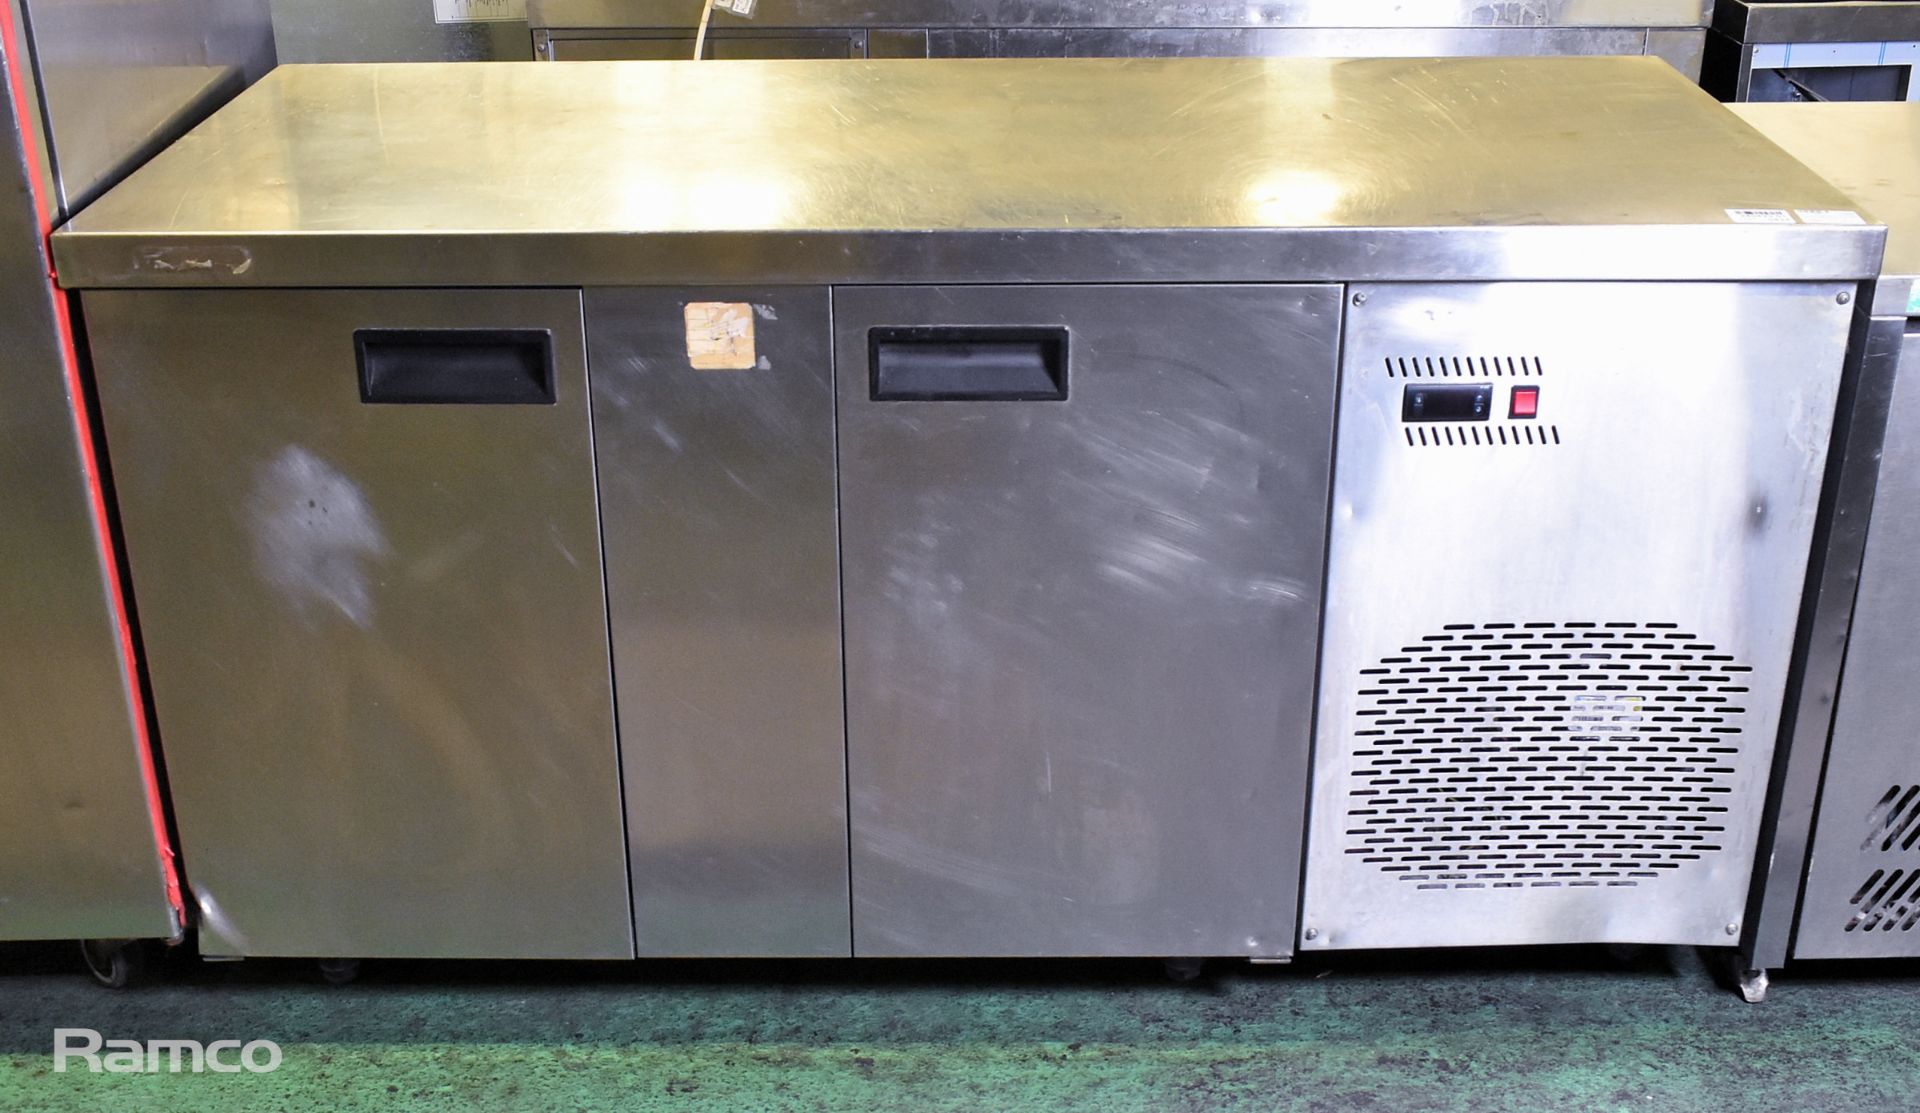 Blizzard stainless steel double door counter fridge - W 1560 x D 700 x H 860mm